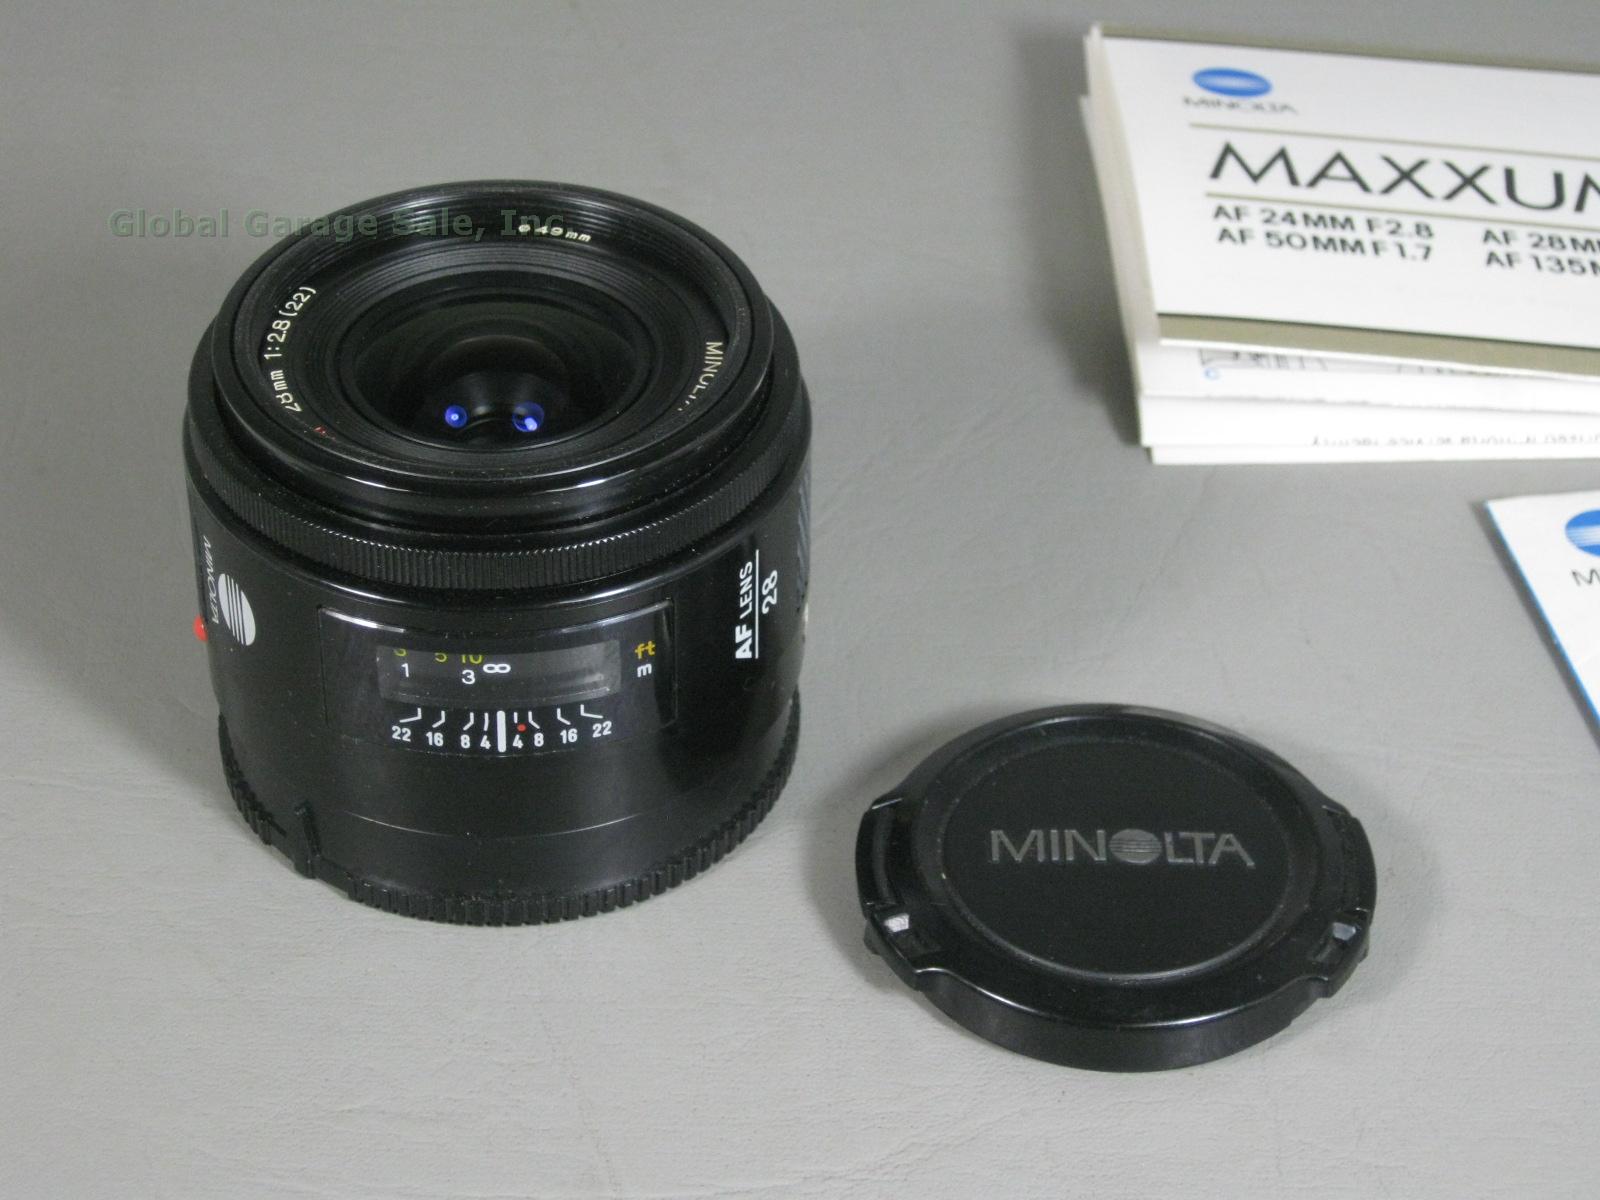 Minolta Maxxum 28 mm 28mm F/2.8 1:2.8 AF Wide Angle Camera Lens Sony Alpha NR! 1